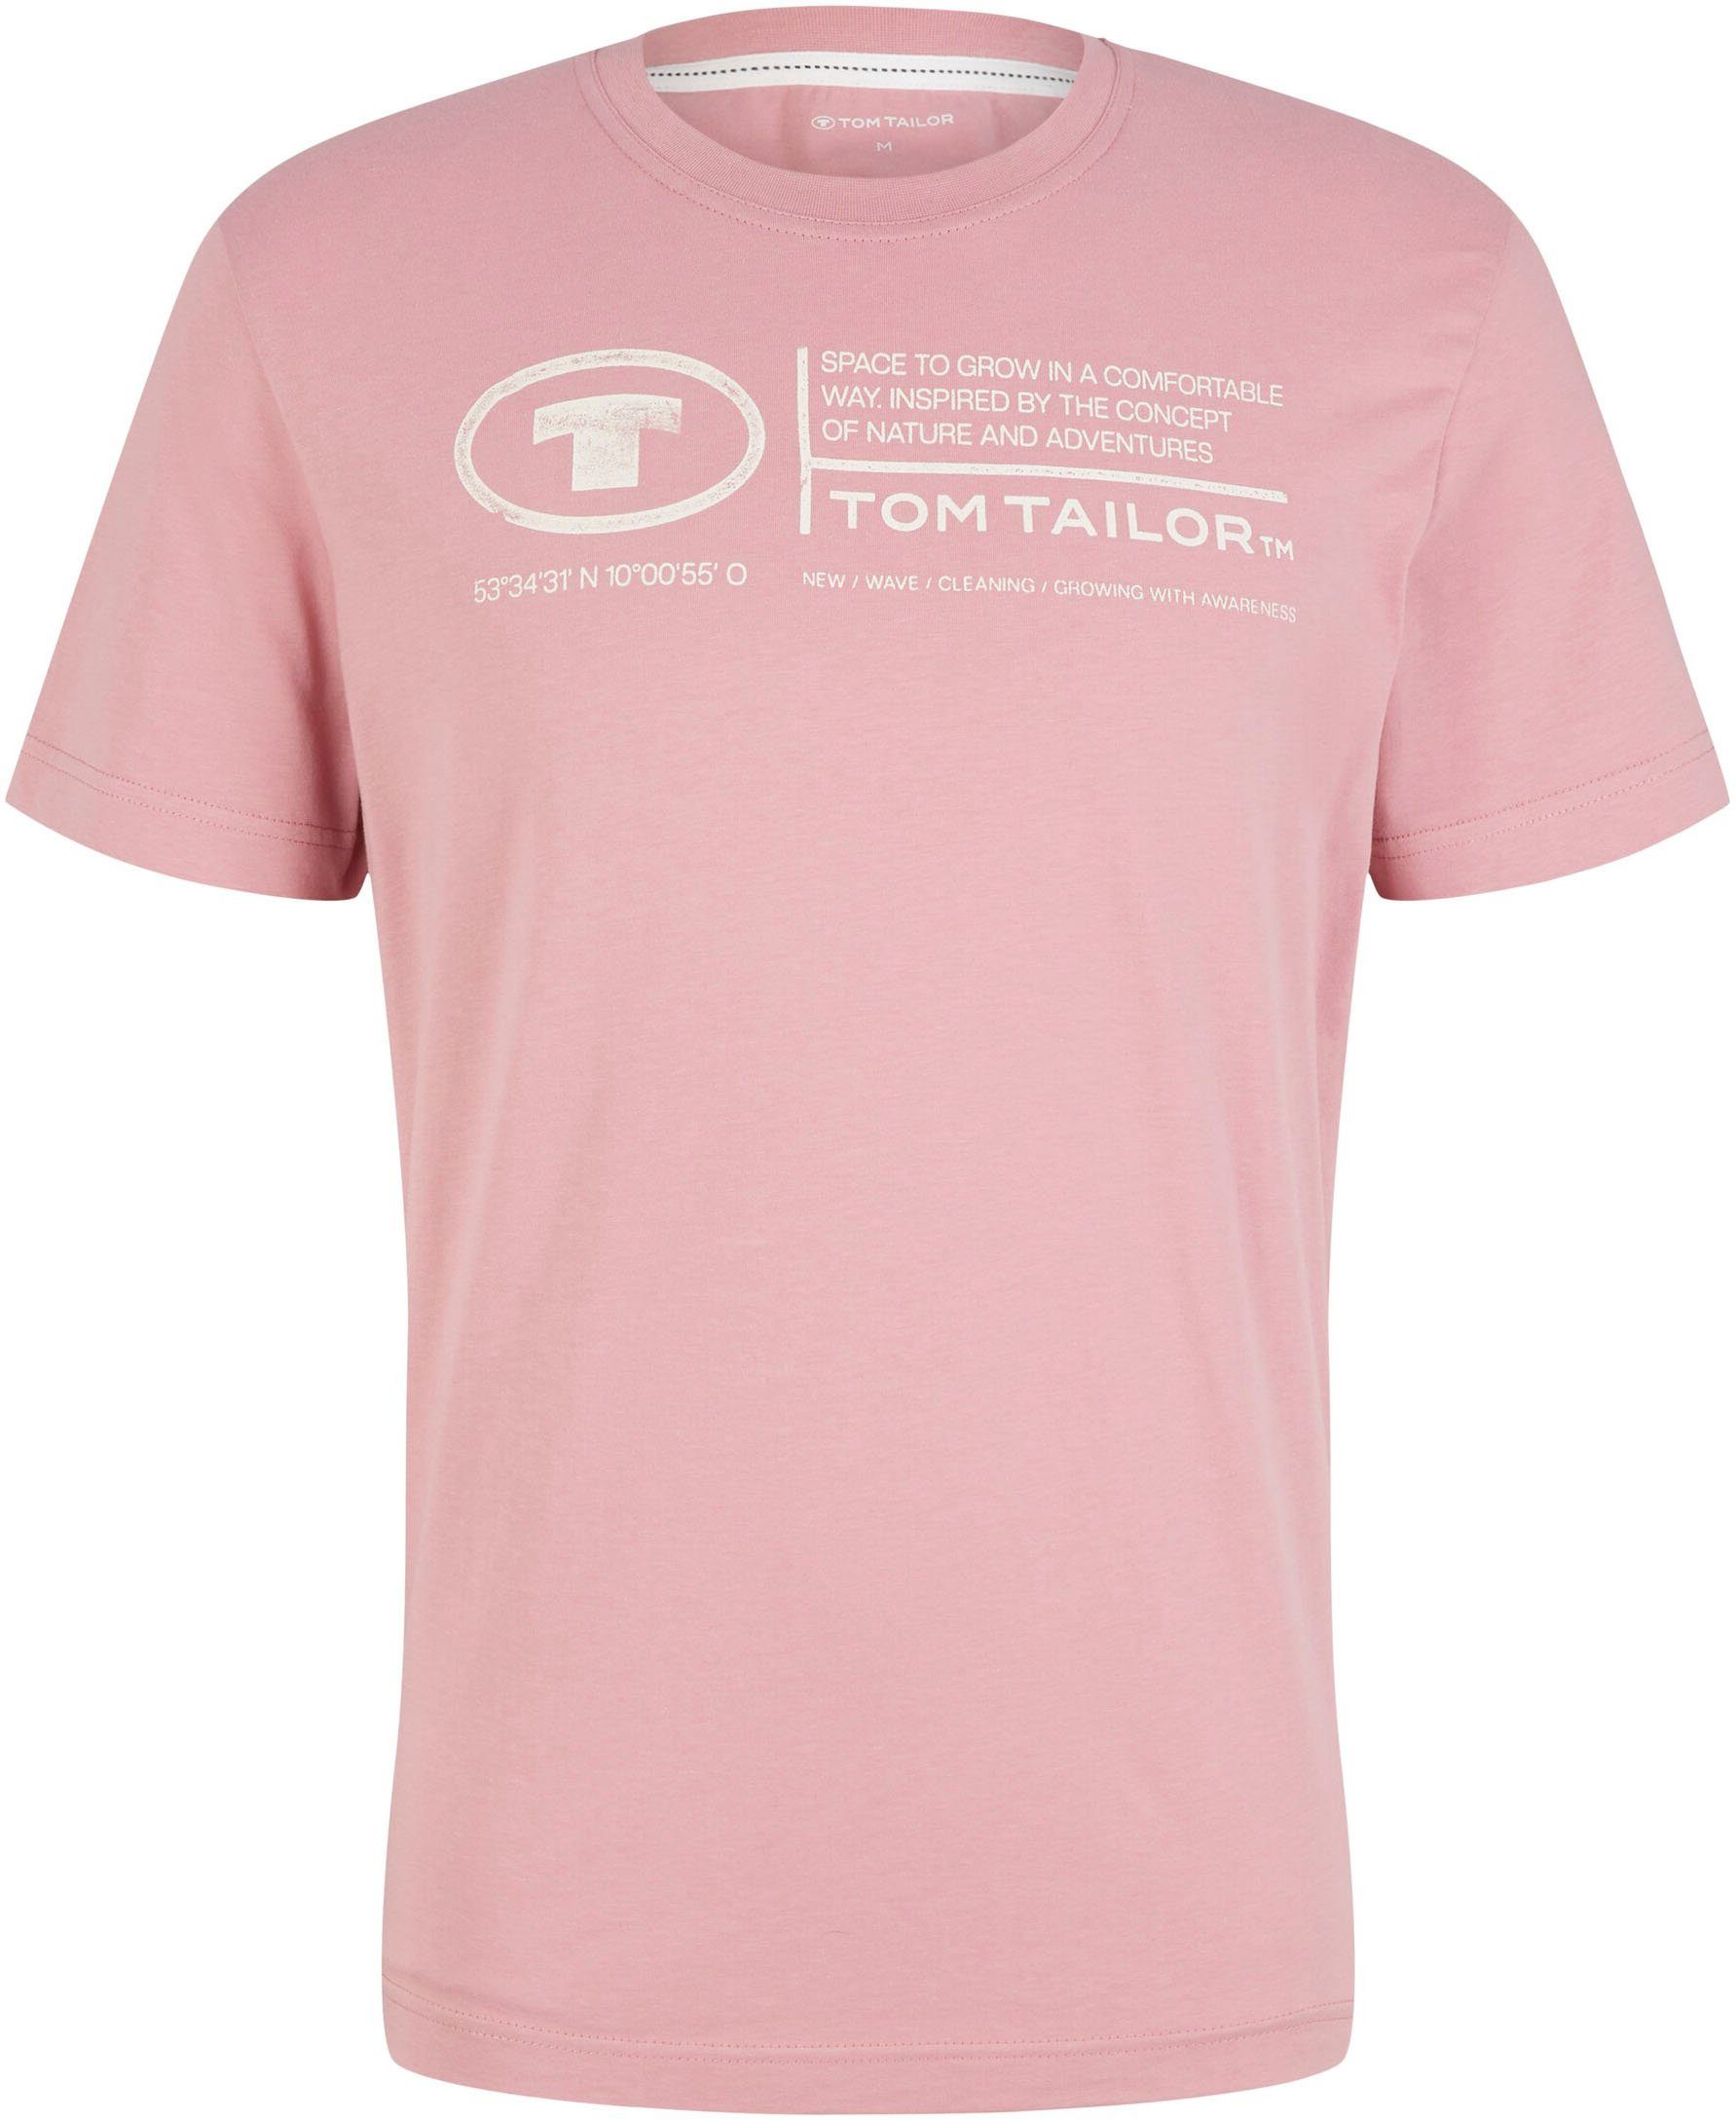 Print-Shirt altrosa TOM Herren Tom T-Shirt Frontprint TAILOR Tailor